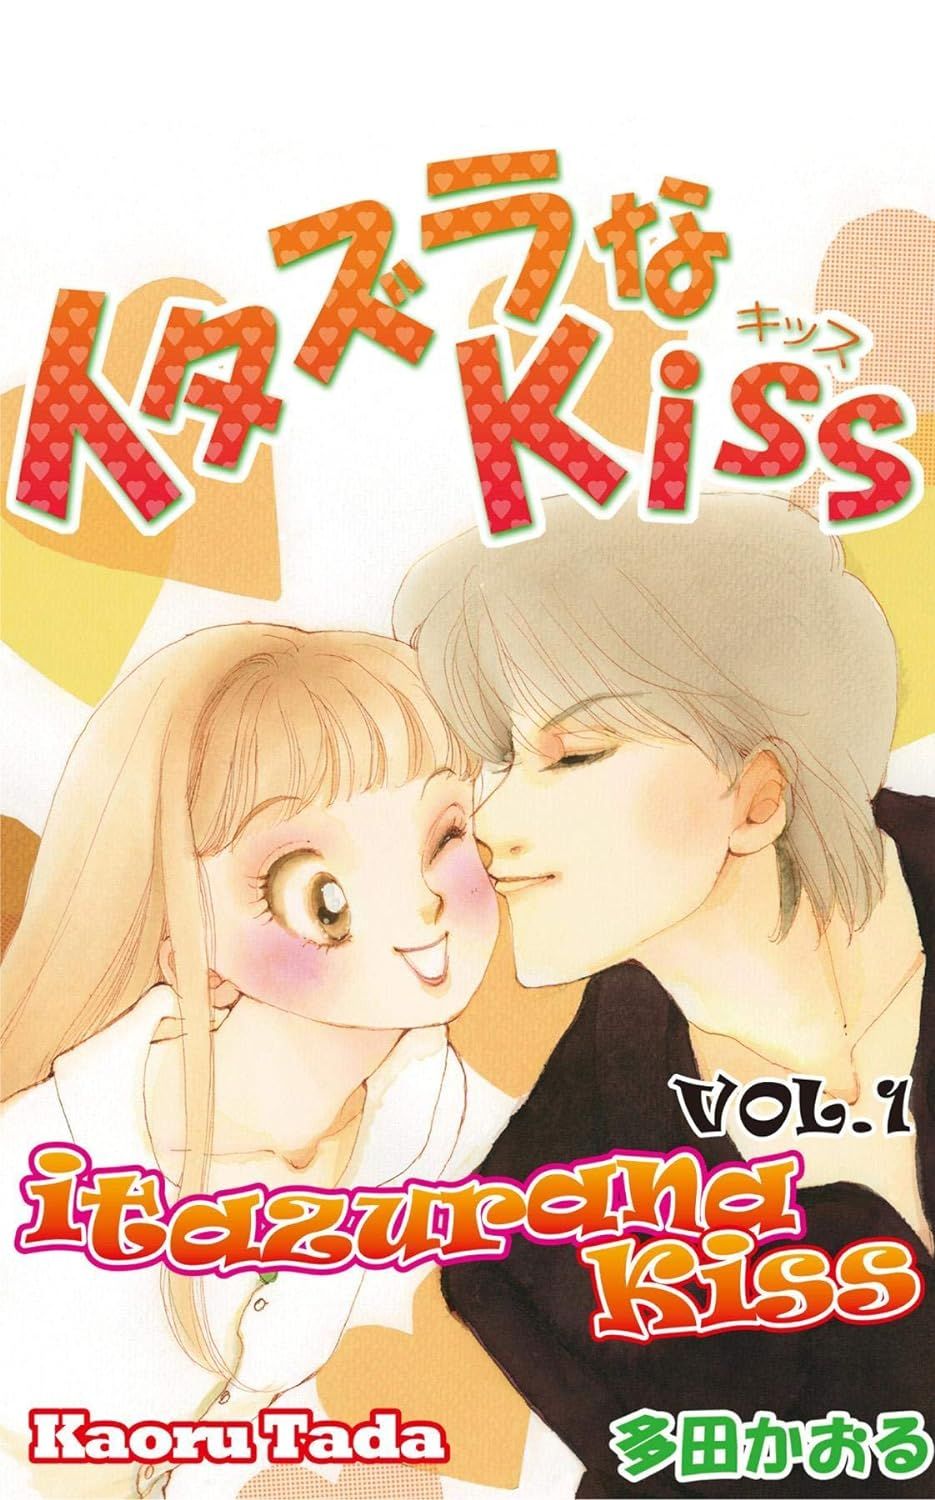 Itazura na Kiss by Kaoru Tada cover